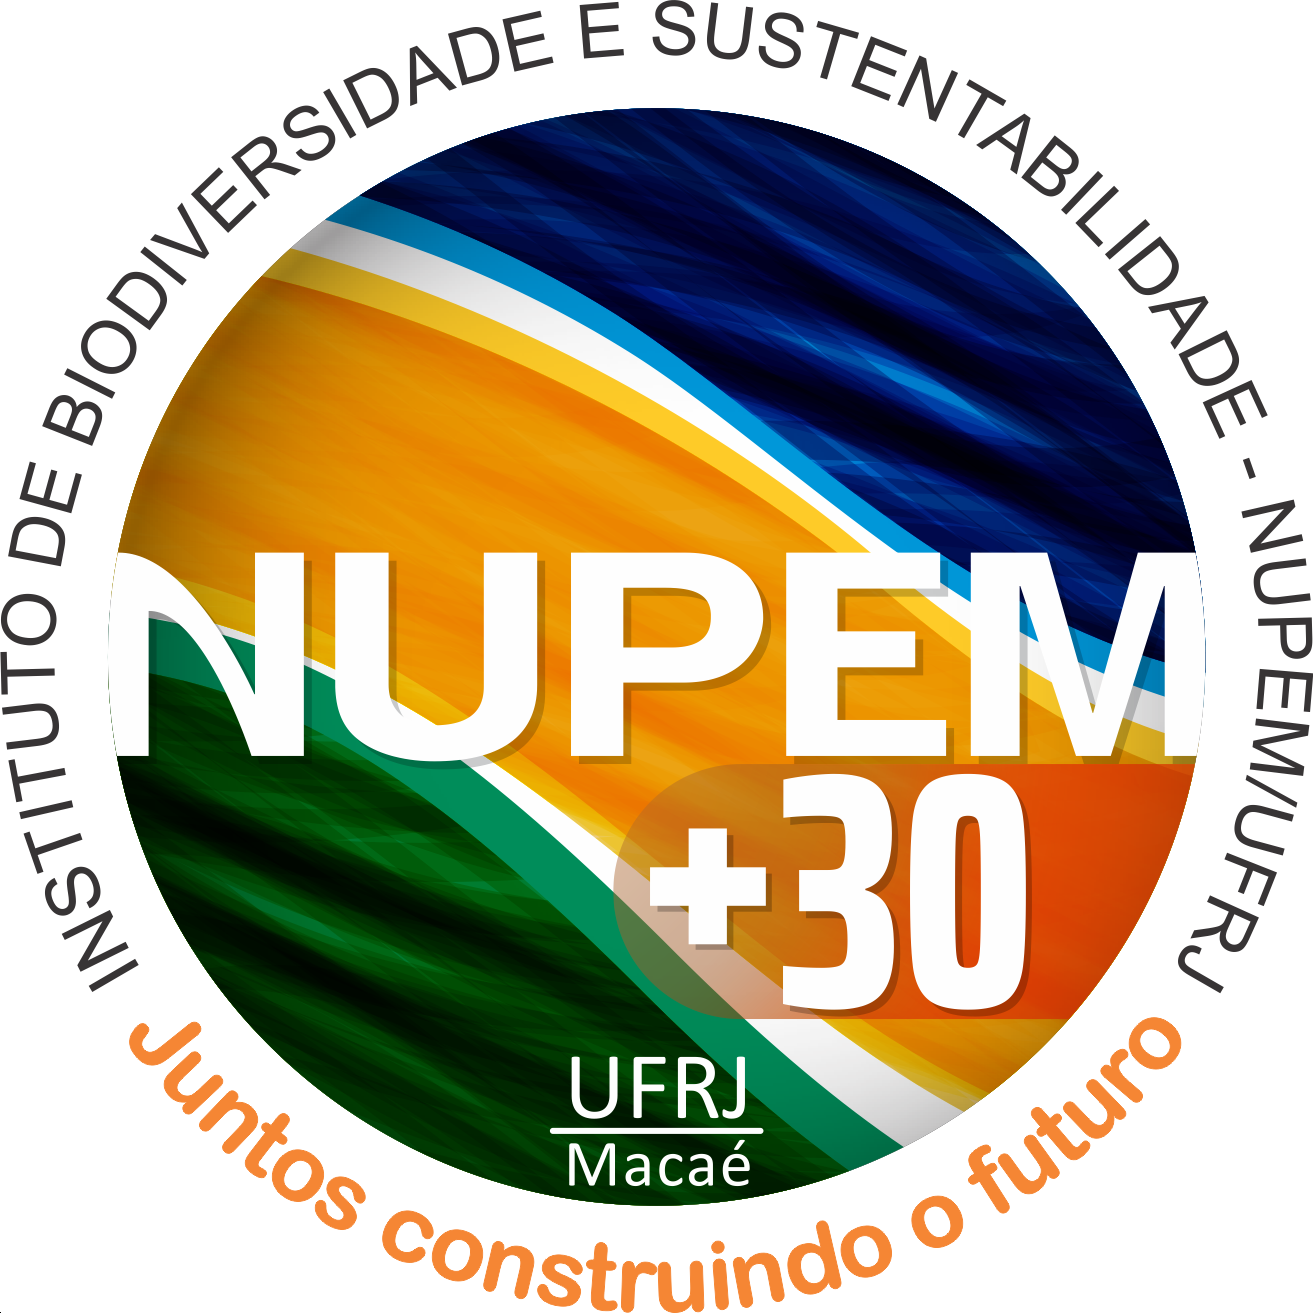 Instituto de Biodiversidade e Sustentabilidade NUPEM/UFRJ